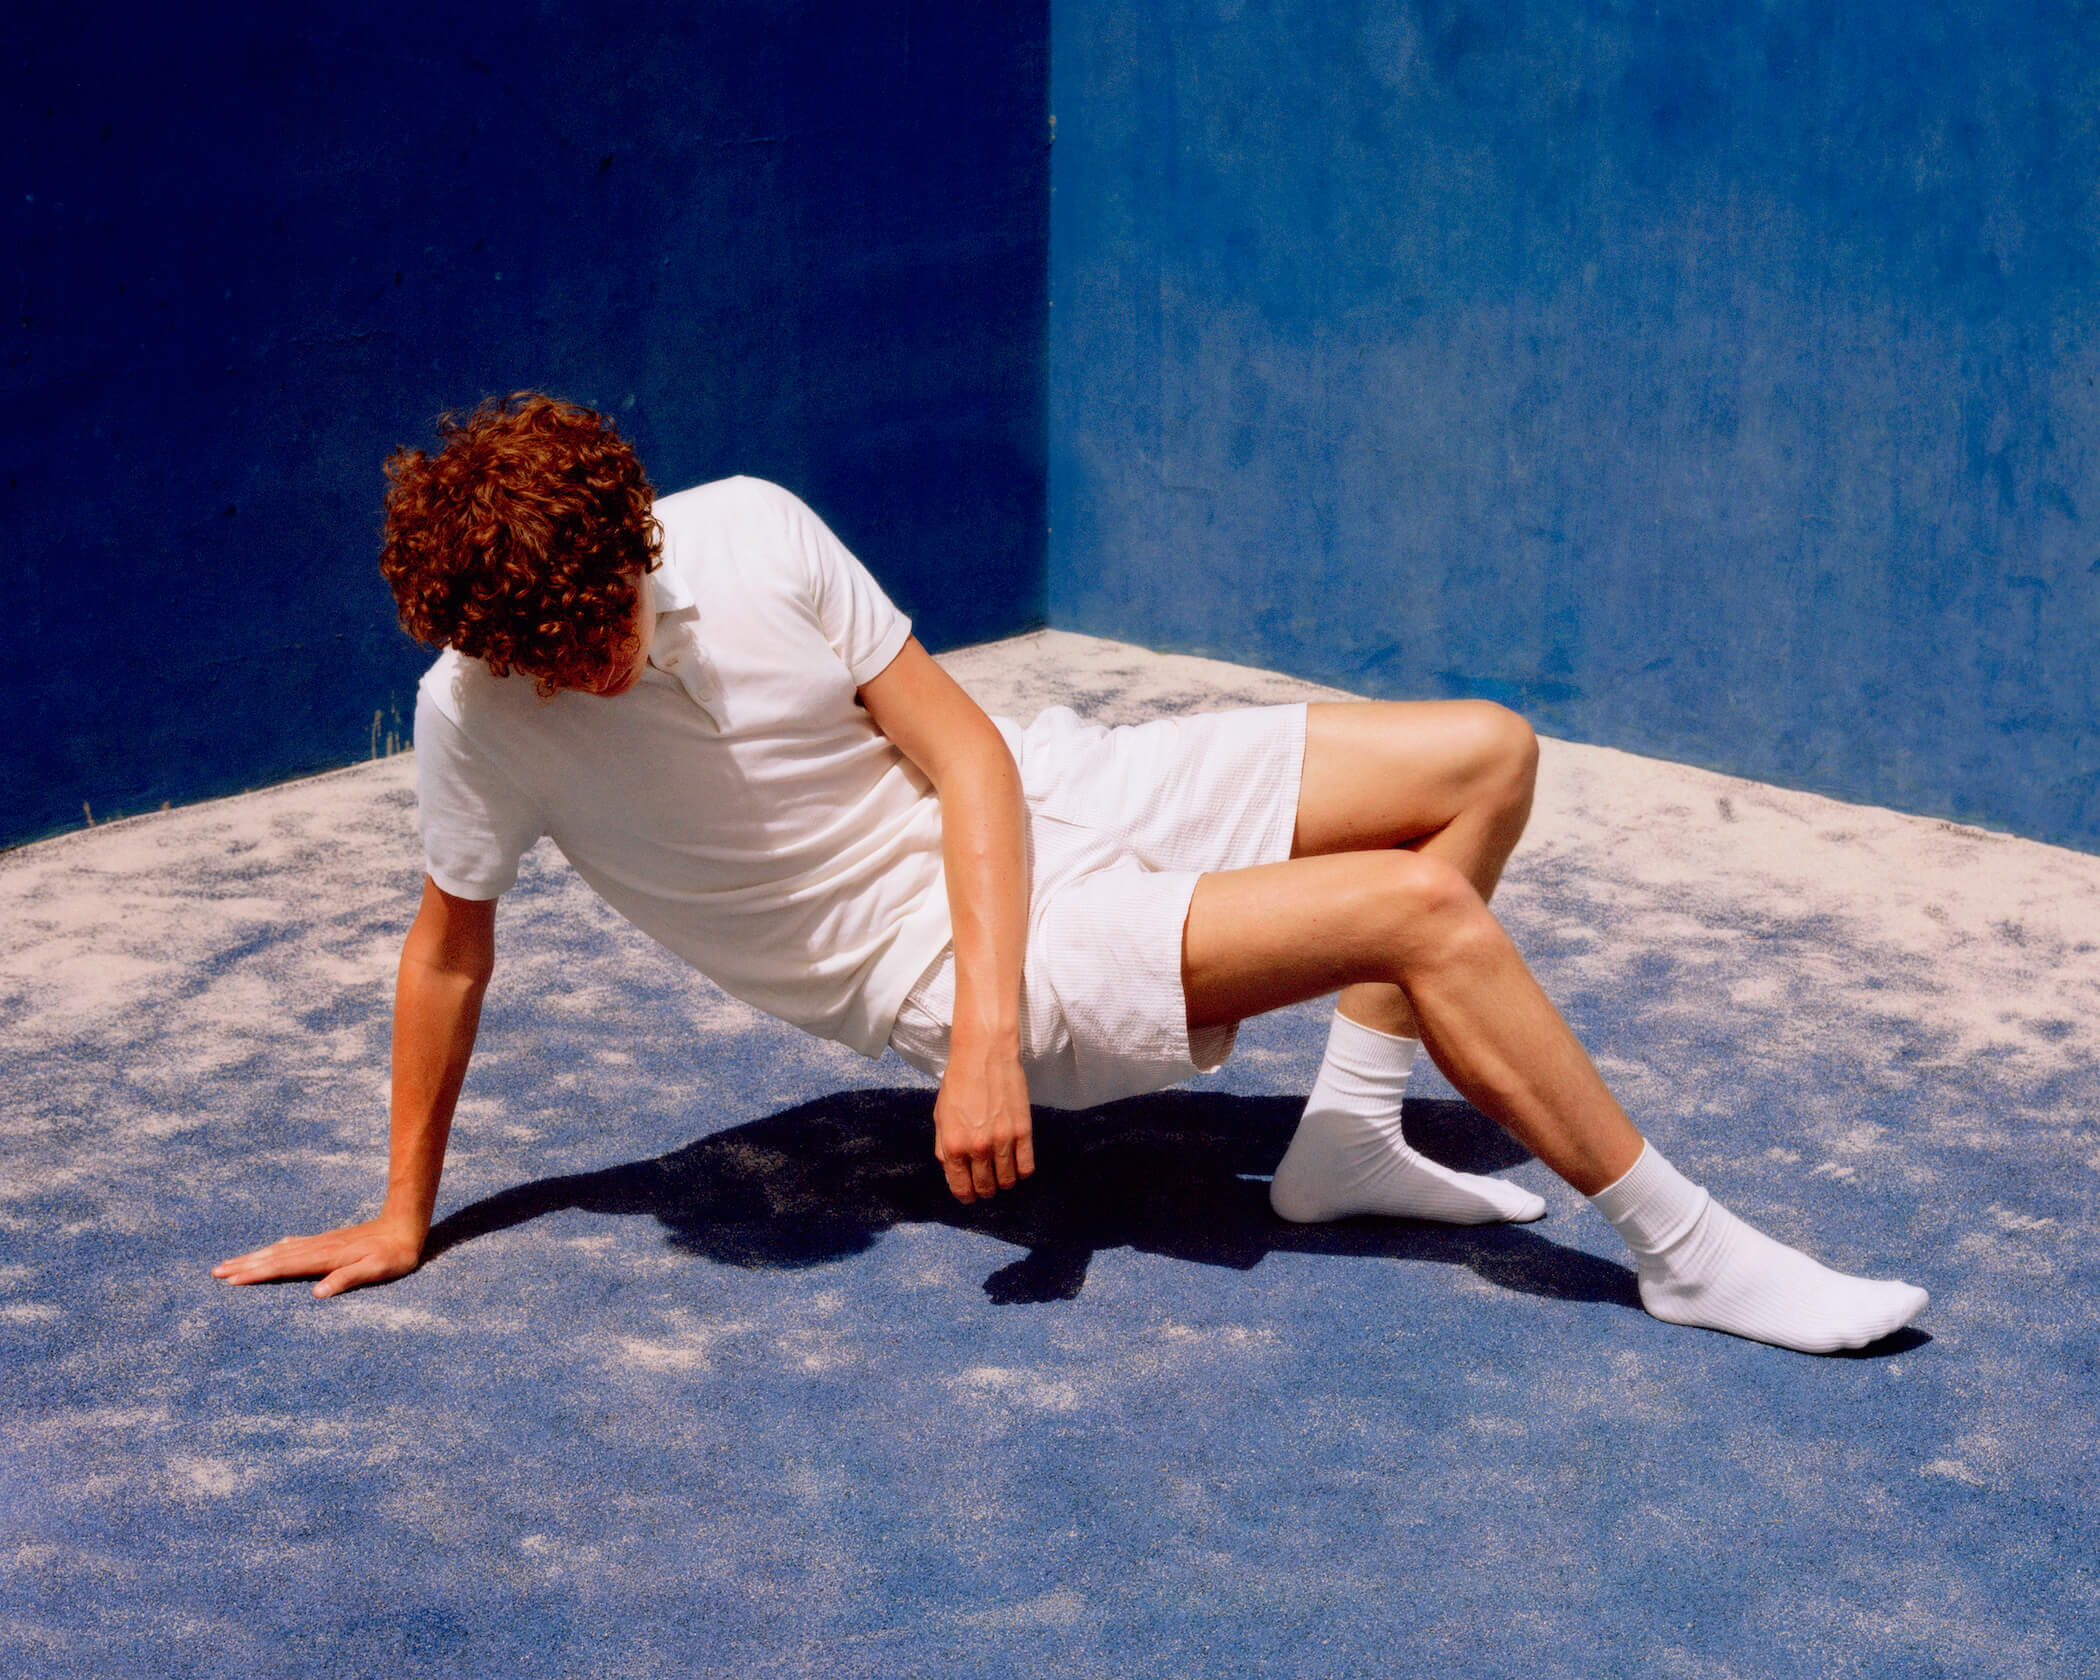 Jens in White with Blue, 2022 | Sander Coers, from Blue Mood (Al Mar)